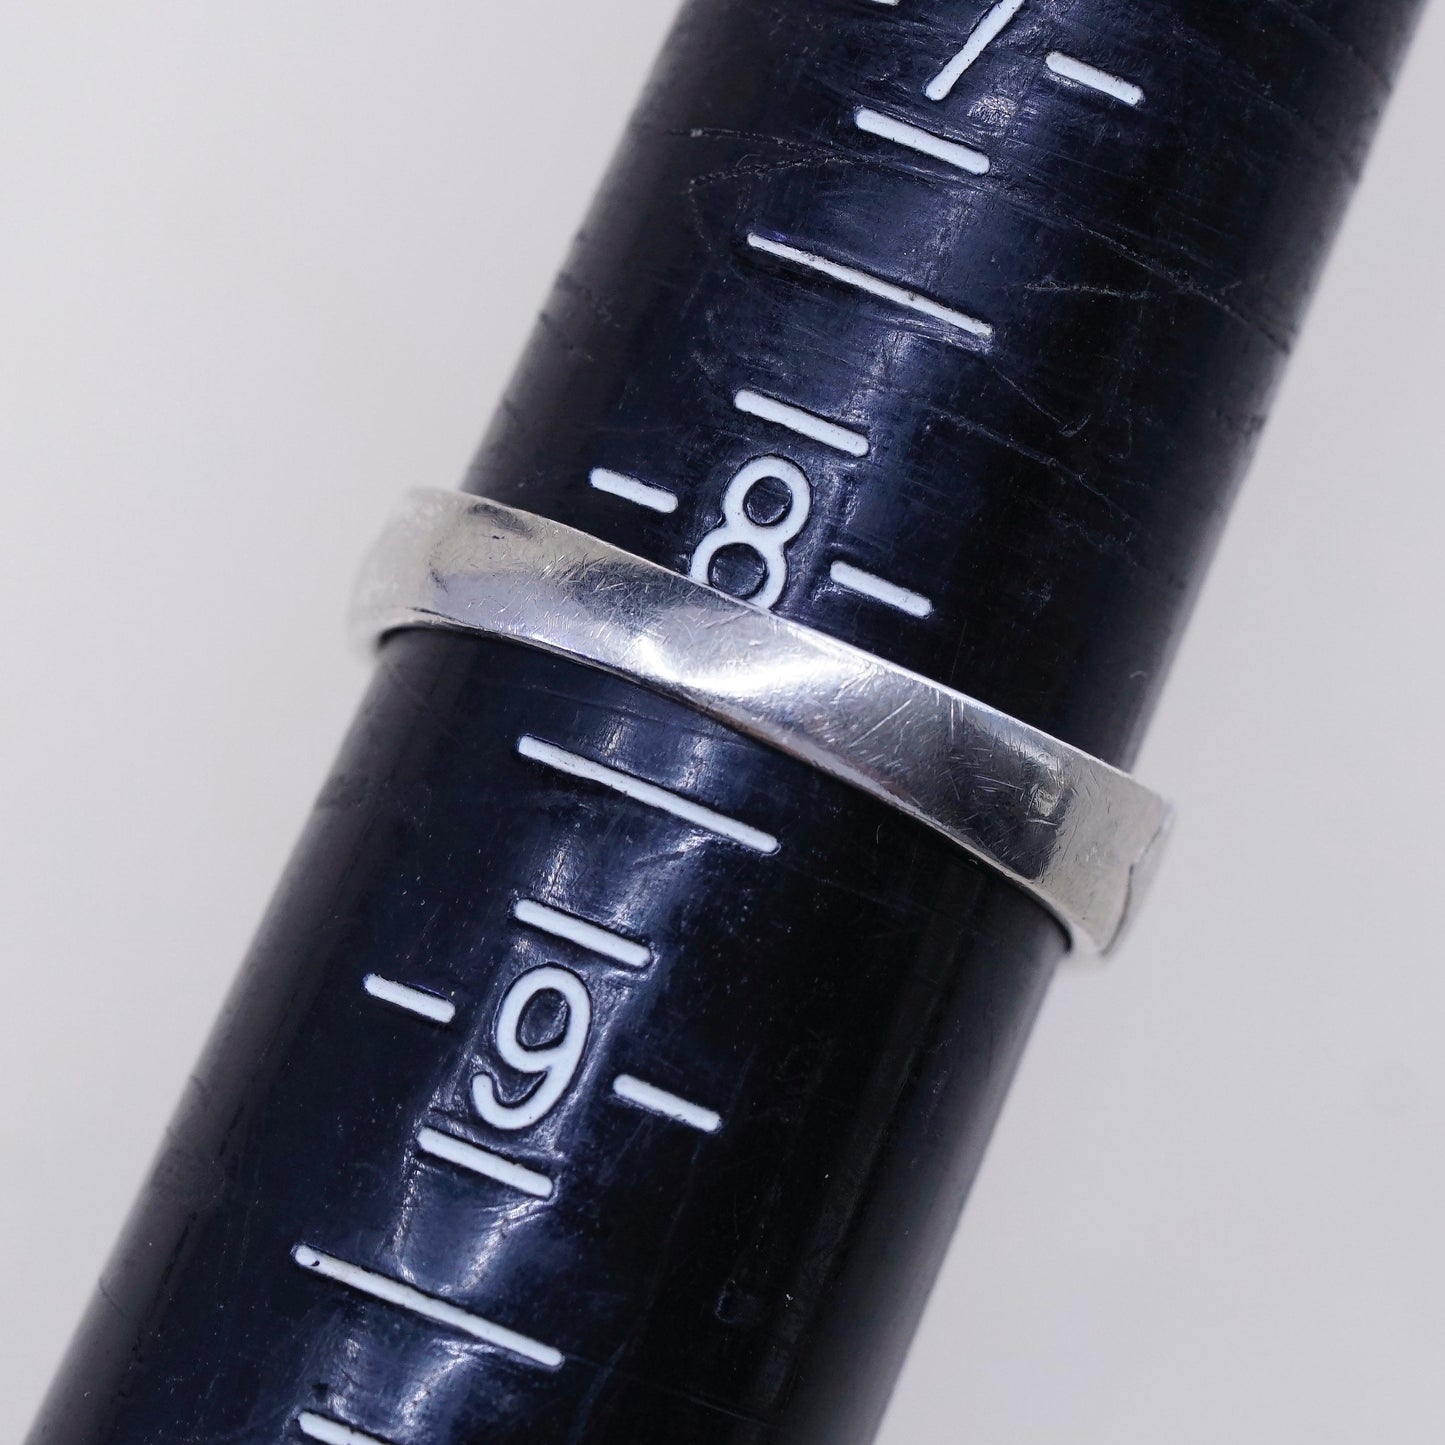 Size 8.25, vintage sterling silver handmade ring, 925 filigree band